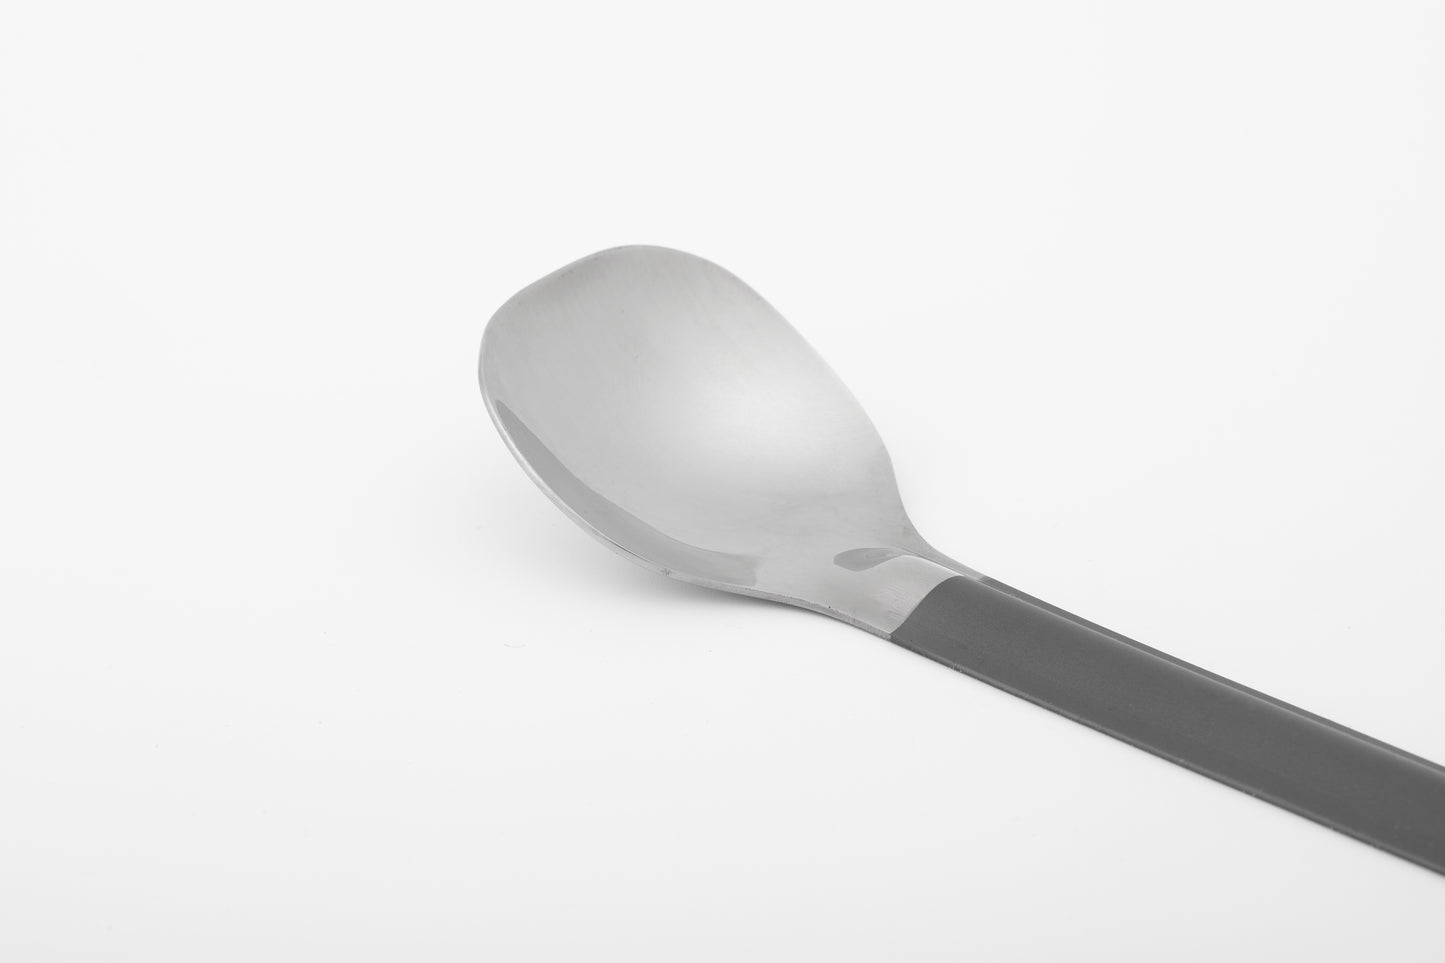 Titanium long handle spoon polished head